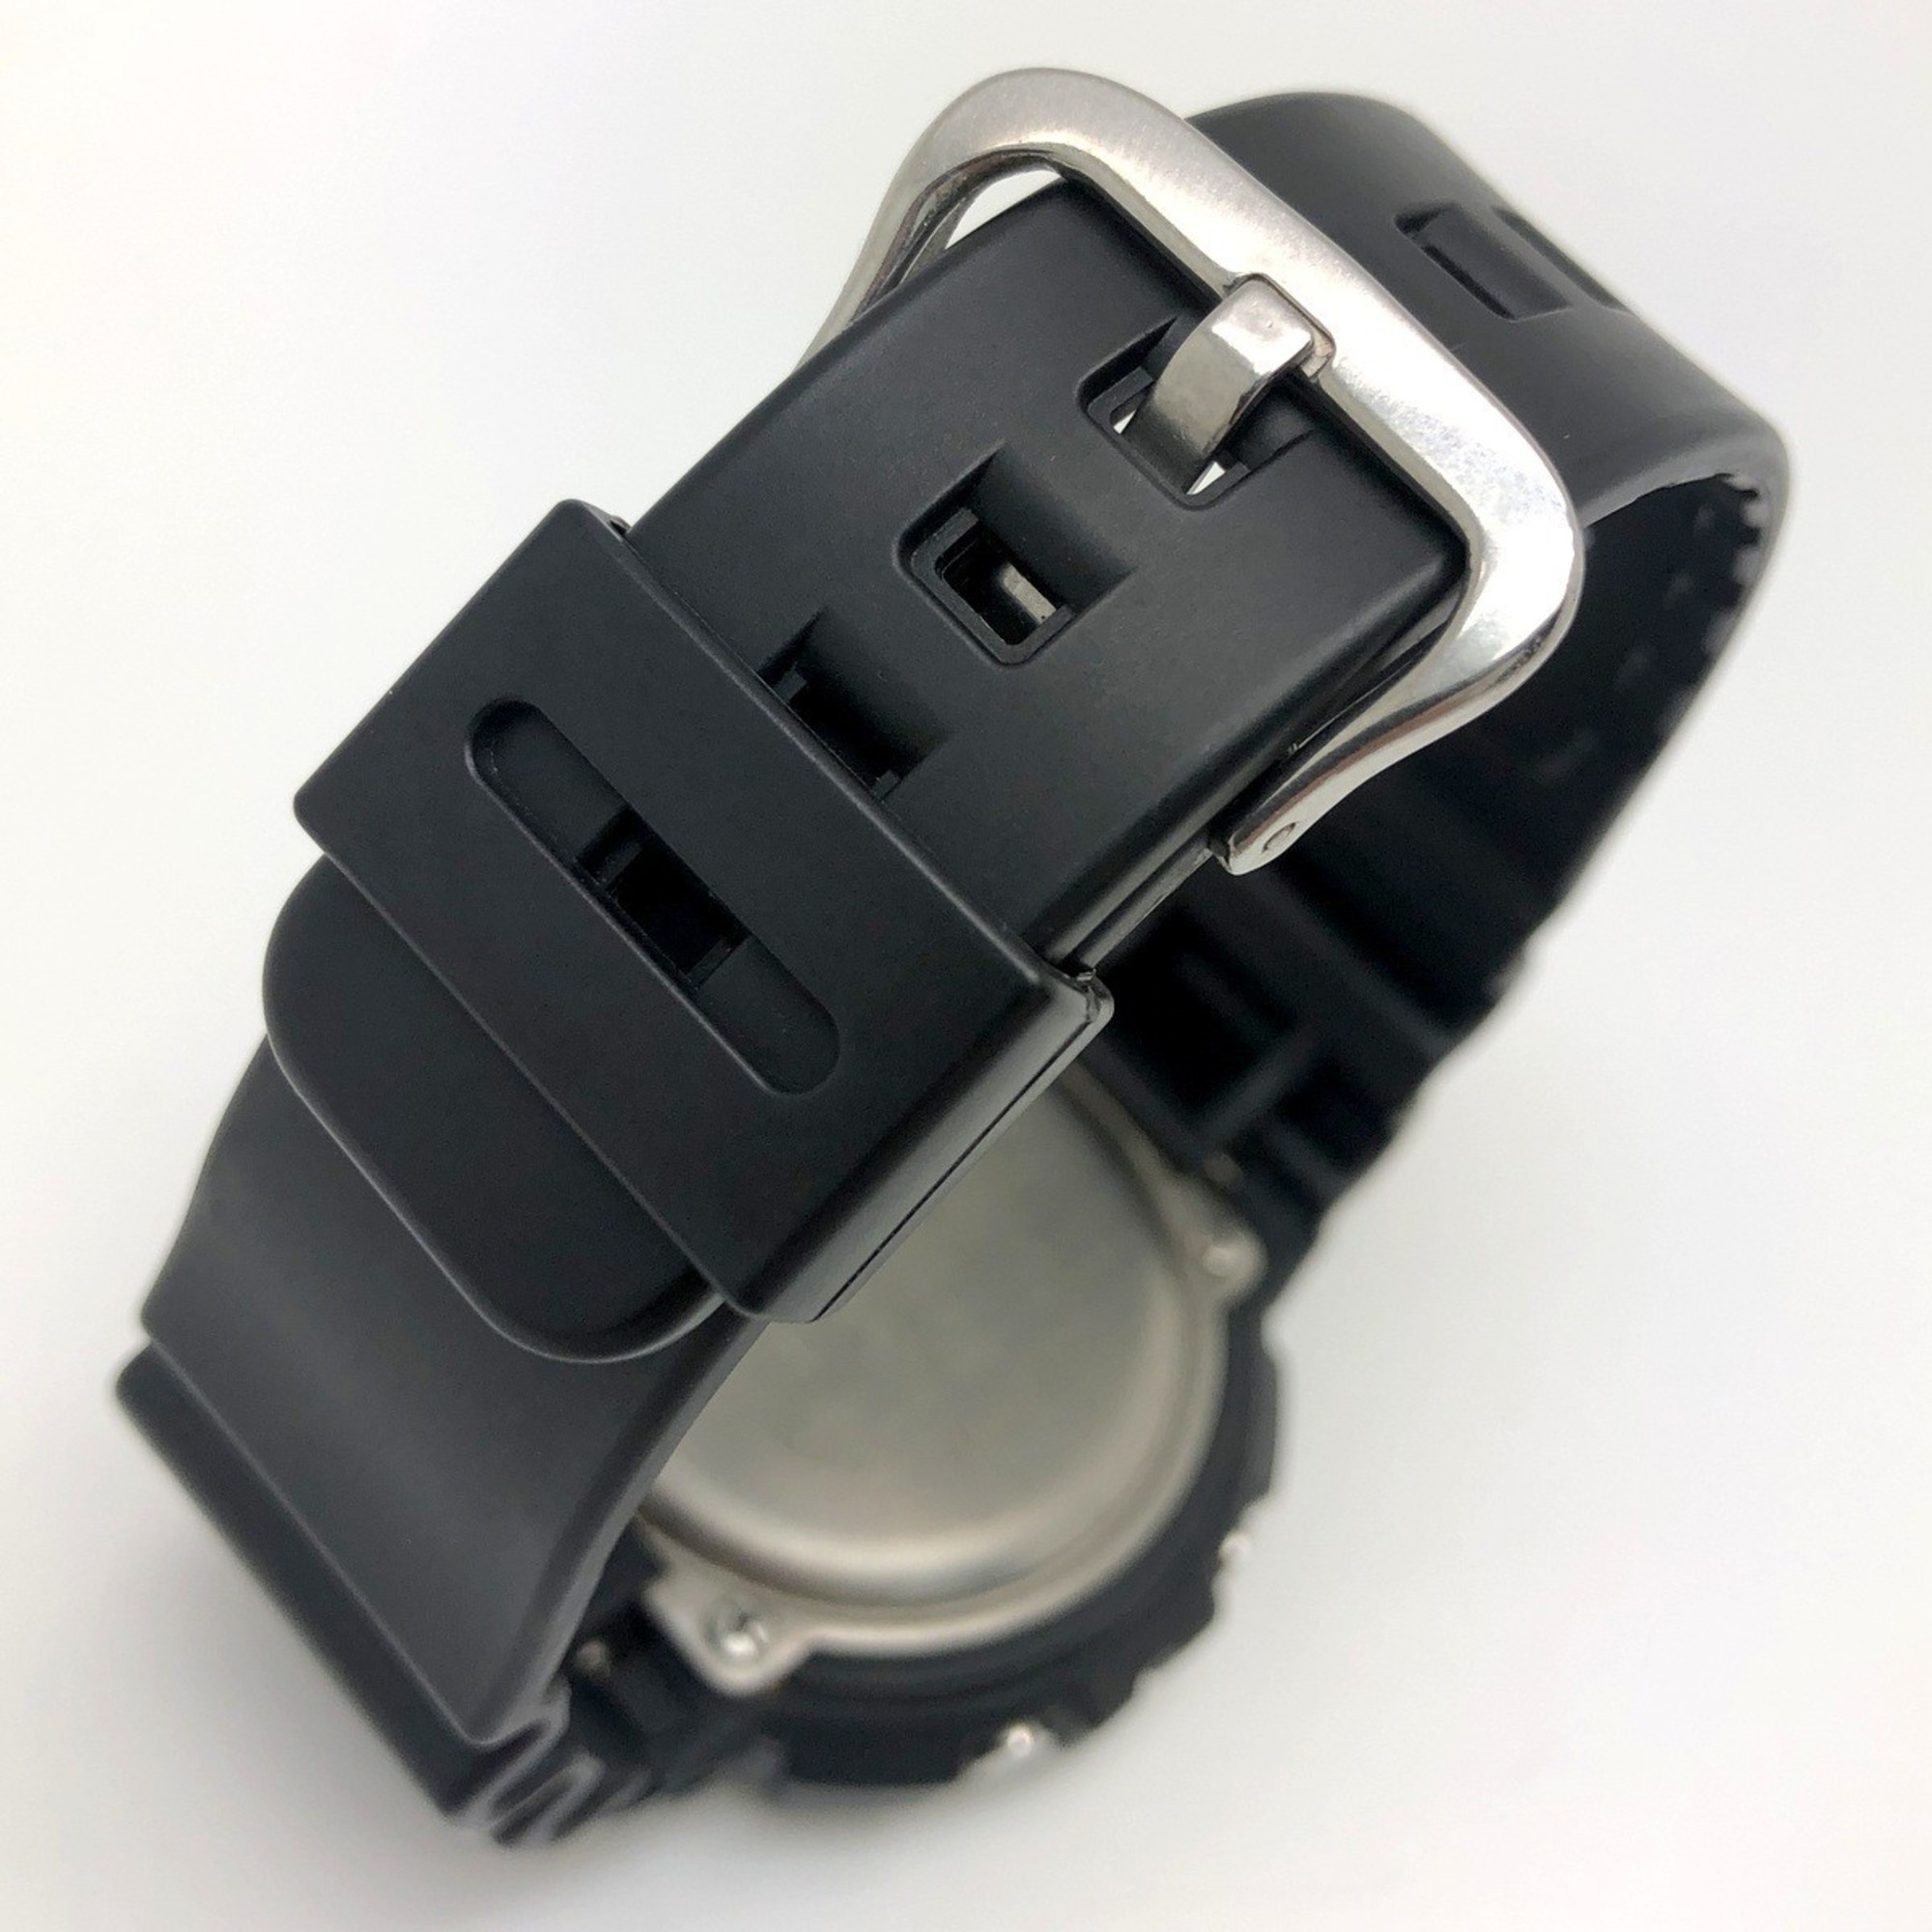 Casio G-Shock Quartz Watch dw-5300-1bv brand name